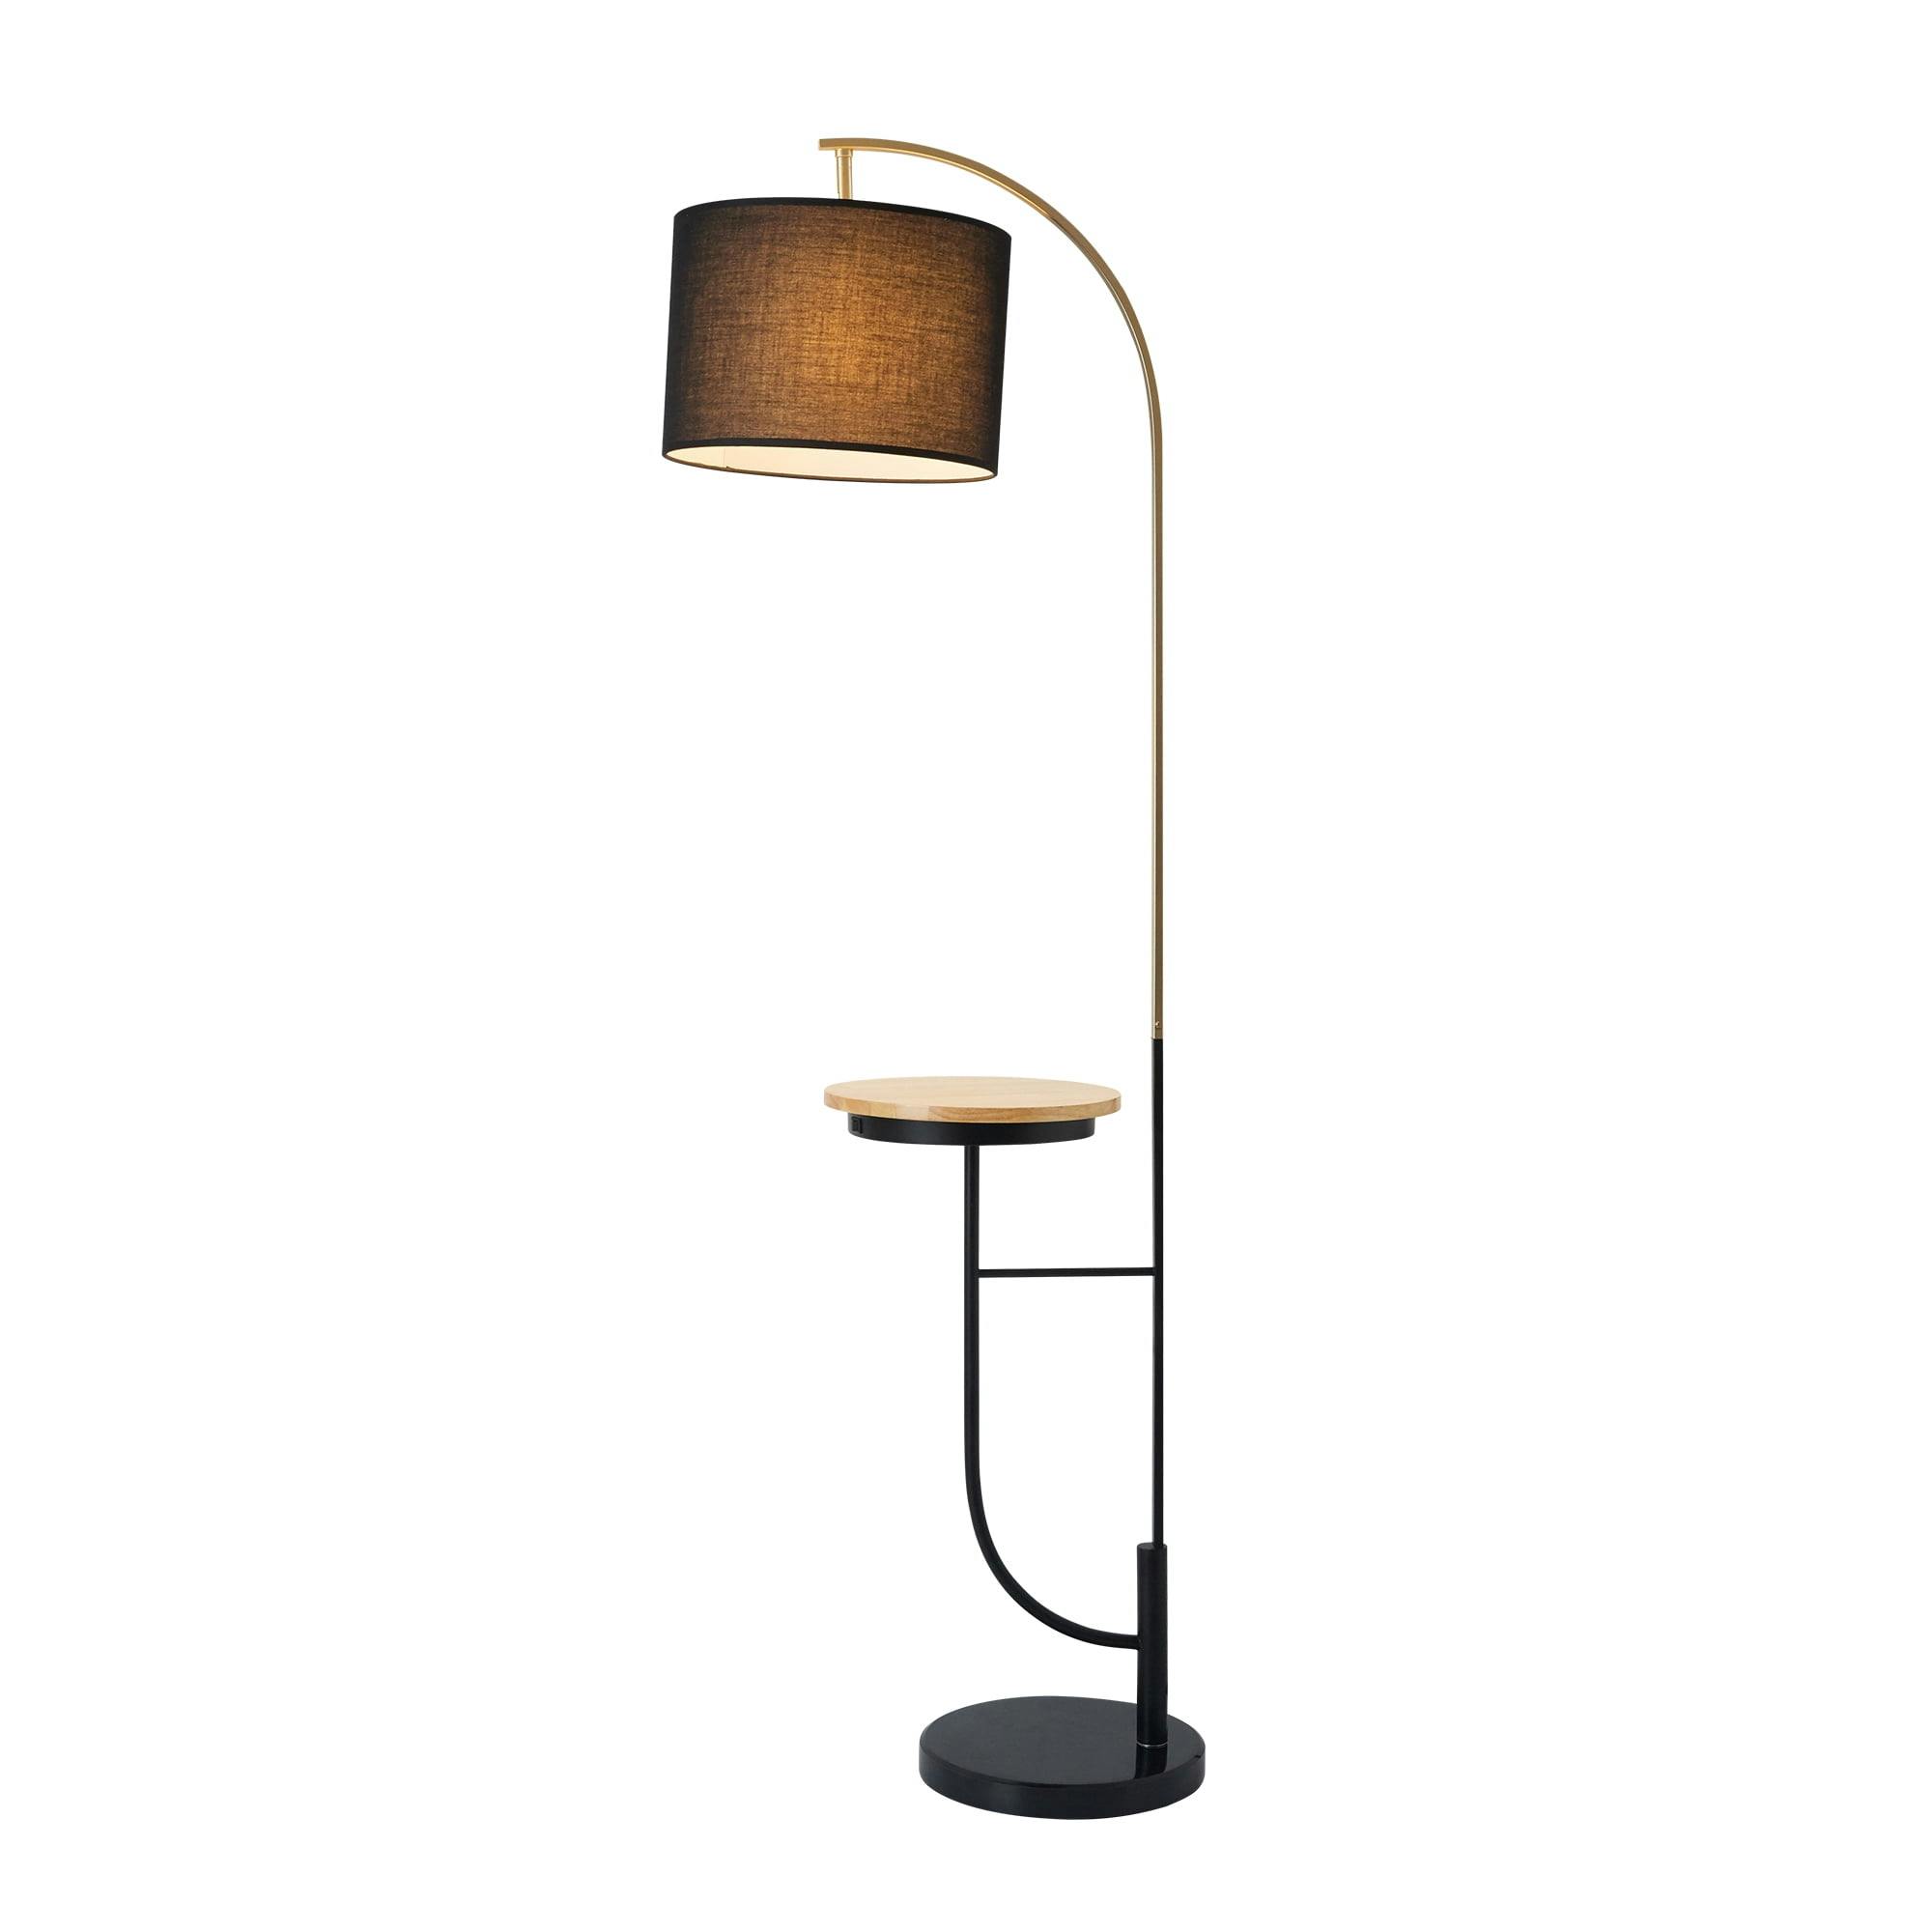 Danna 65" Black Arc Outdoor Floor Lamp with Table & USB Port